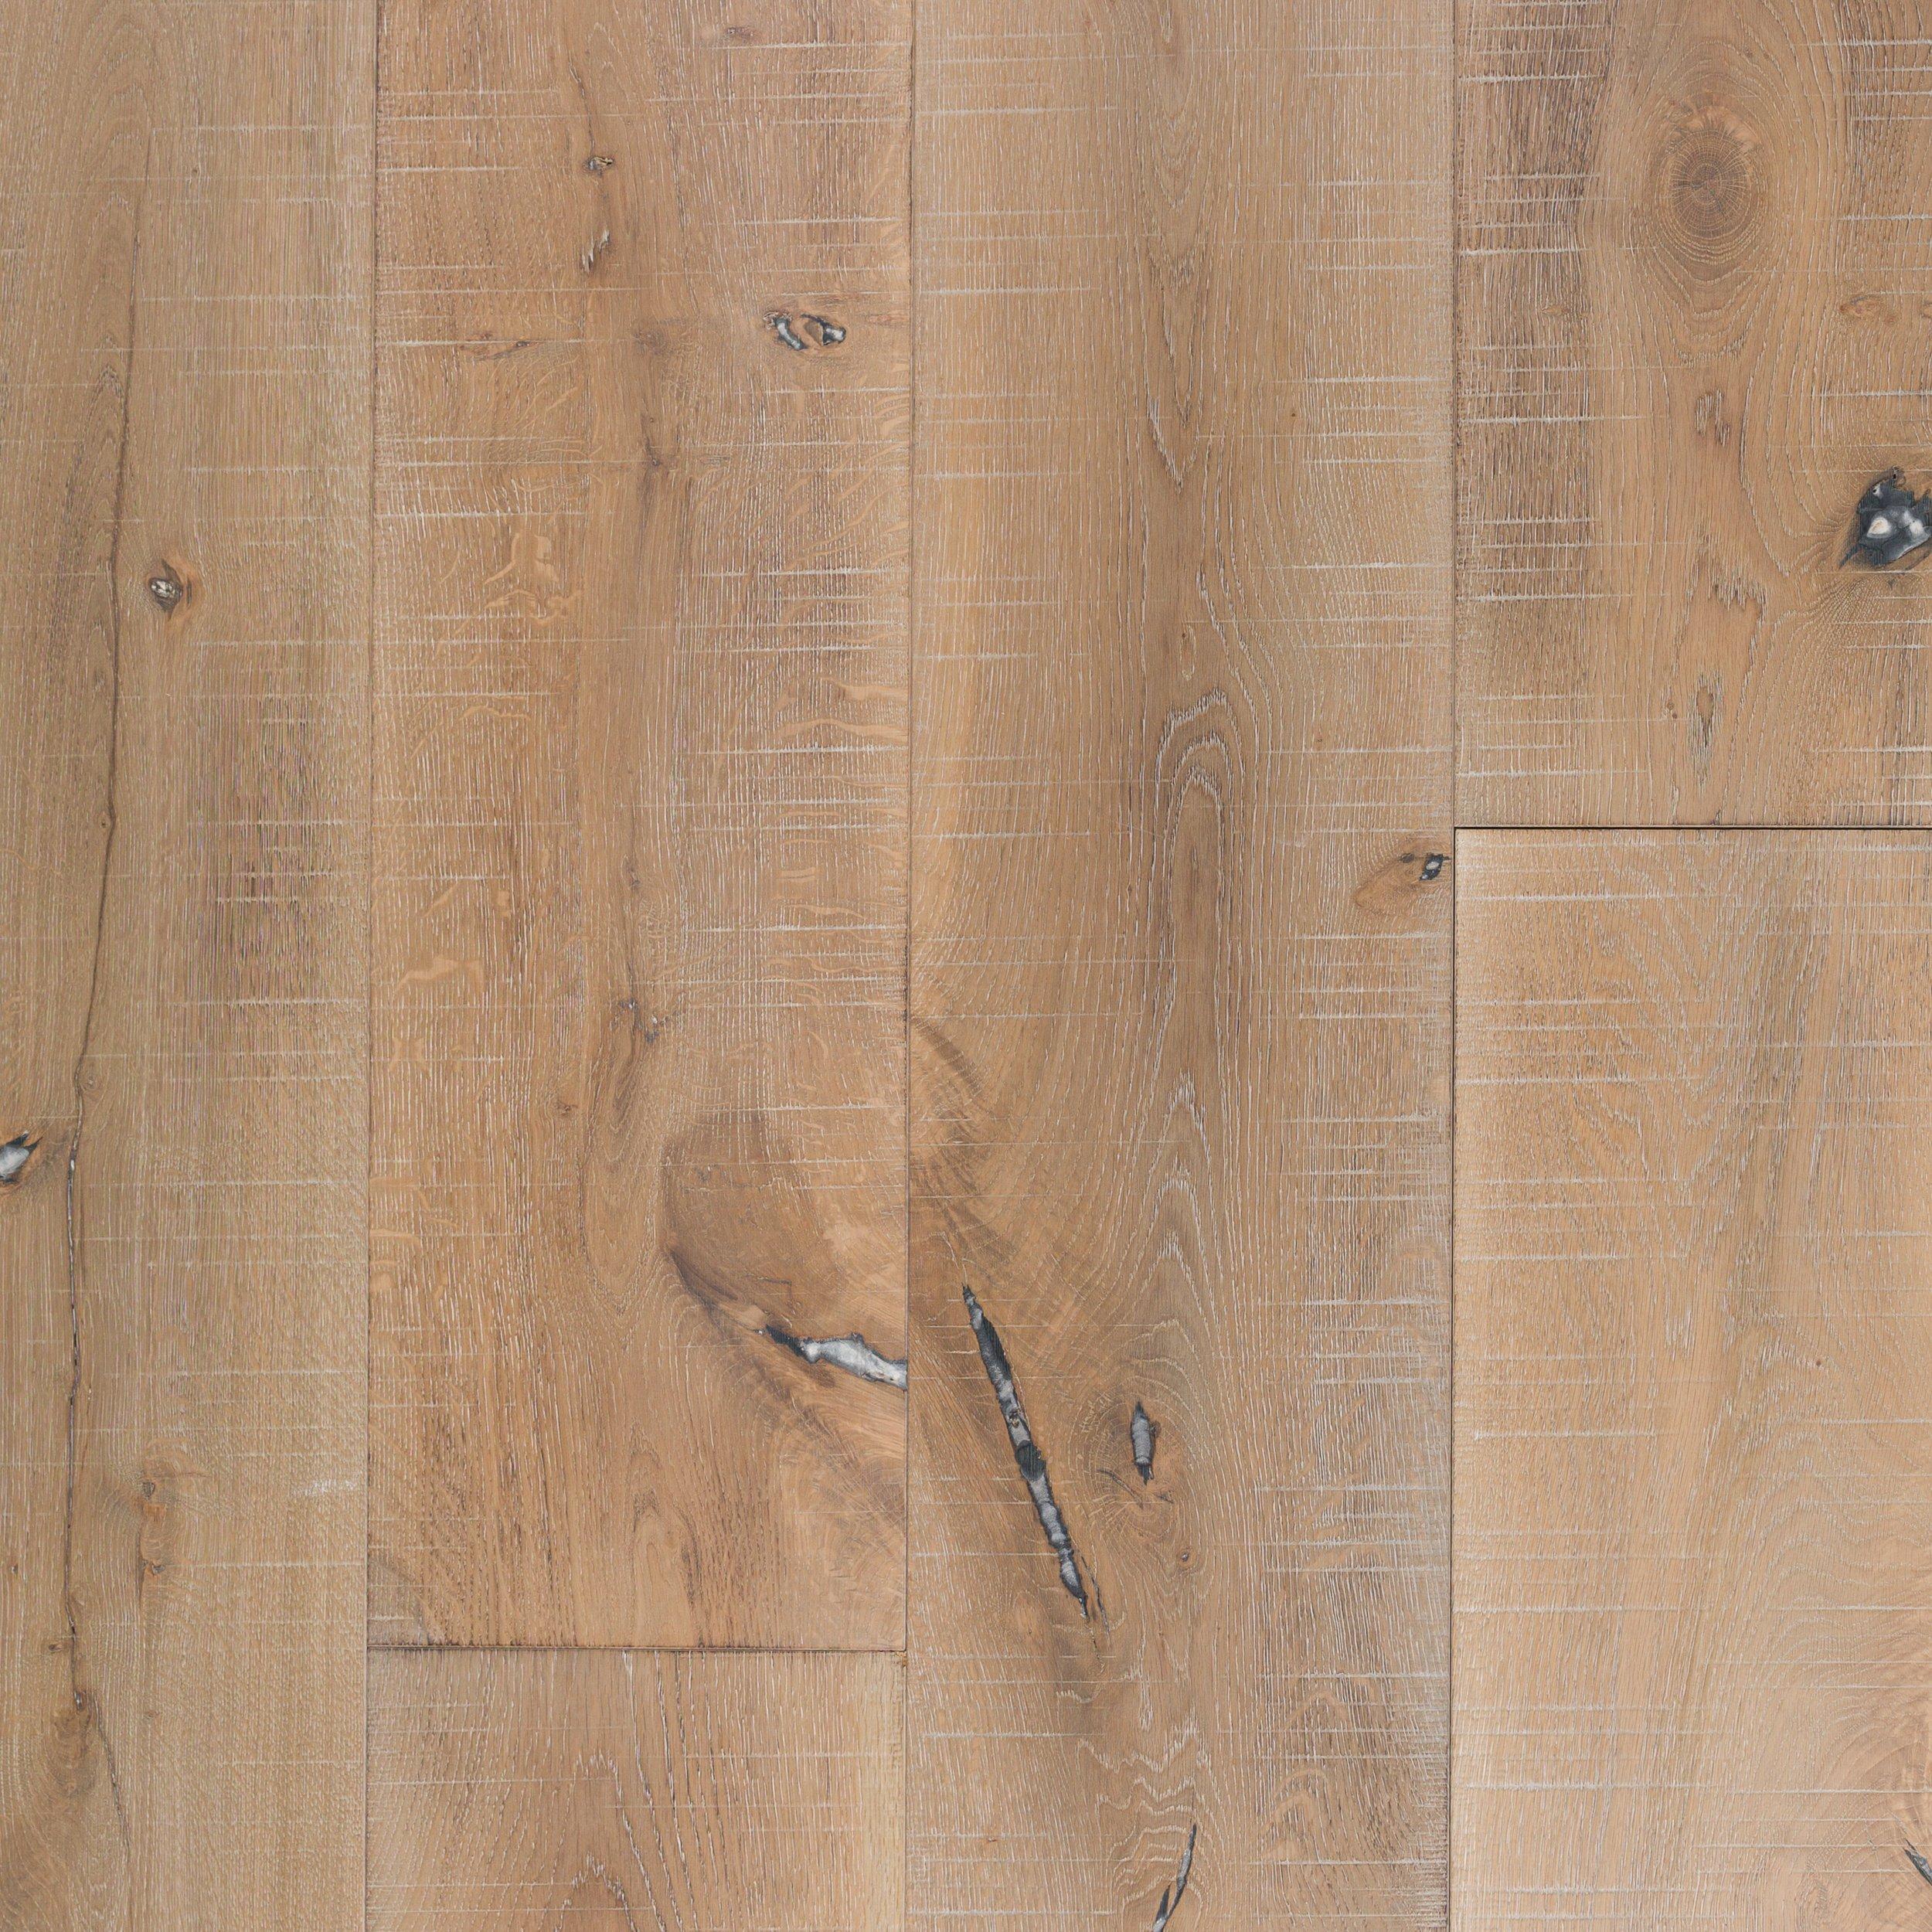 European Oak Rustic Distressed, Photos Of Engineered Hardwood Floors